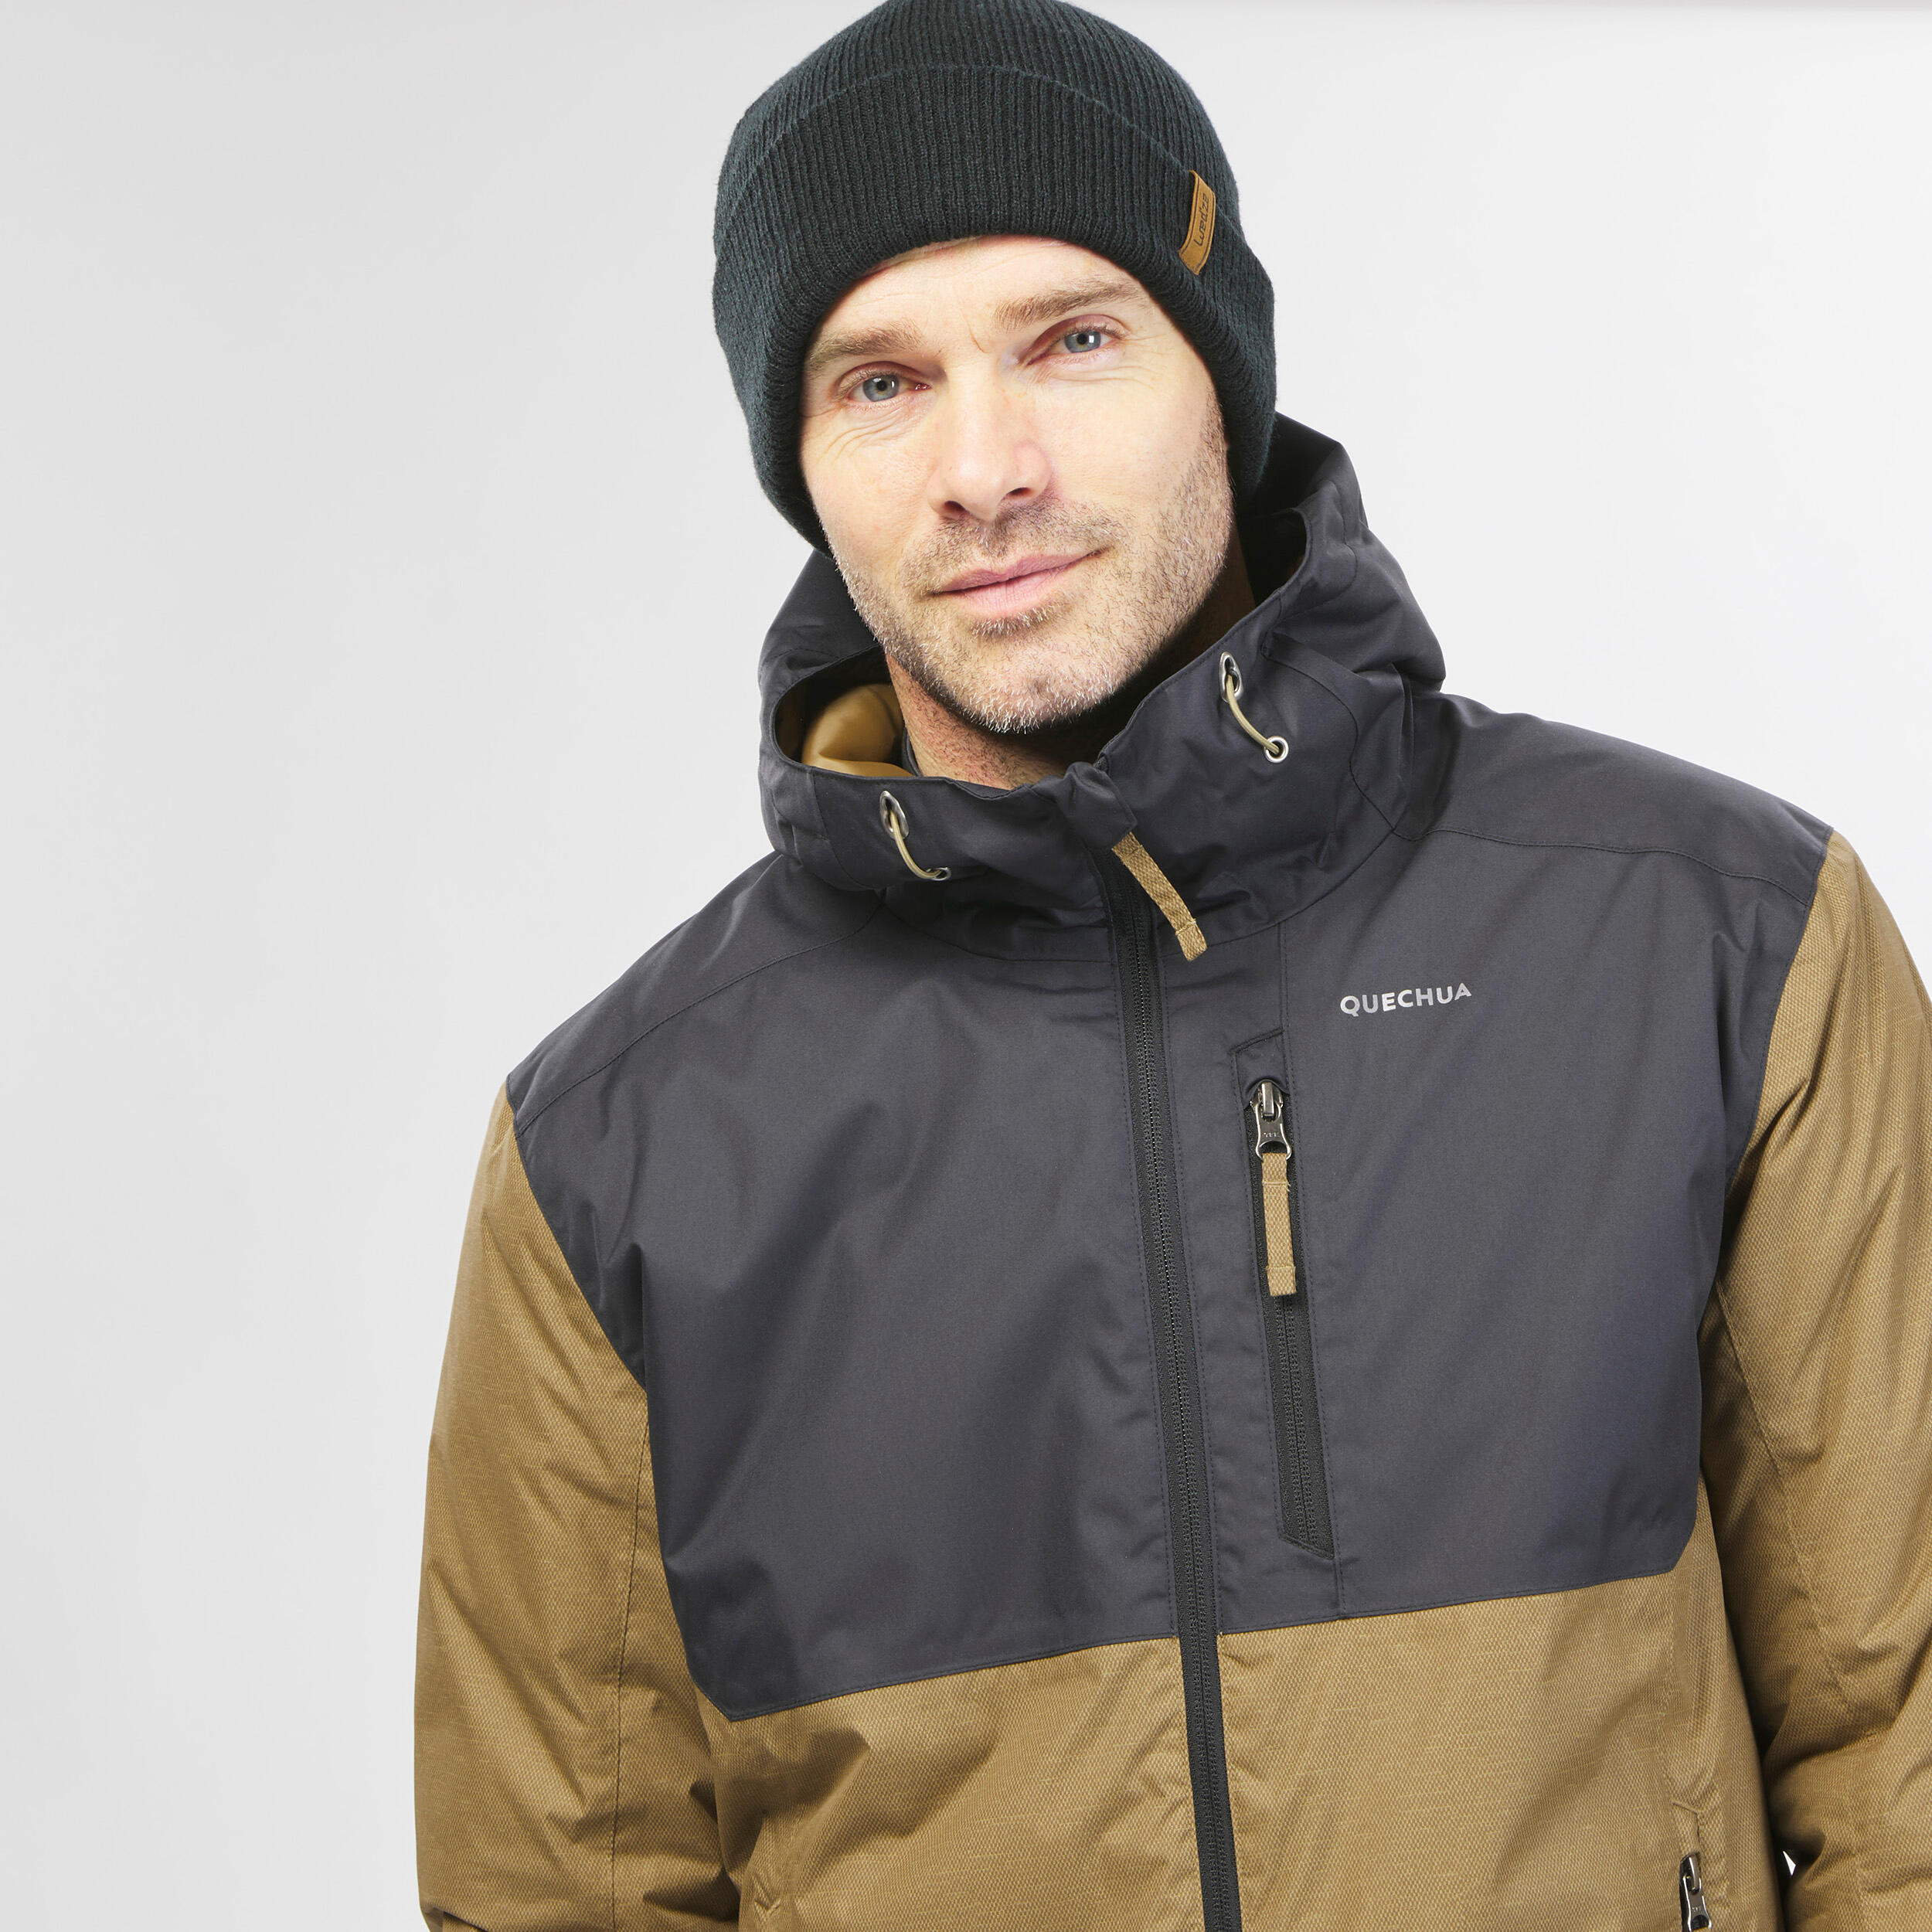 Men’s hiking waterproof winter jacket - SH500 -10°C 9/20